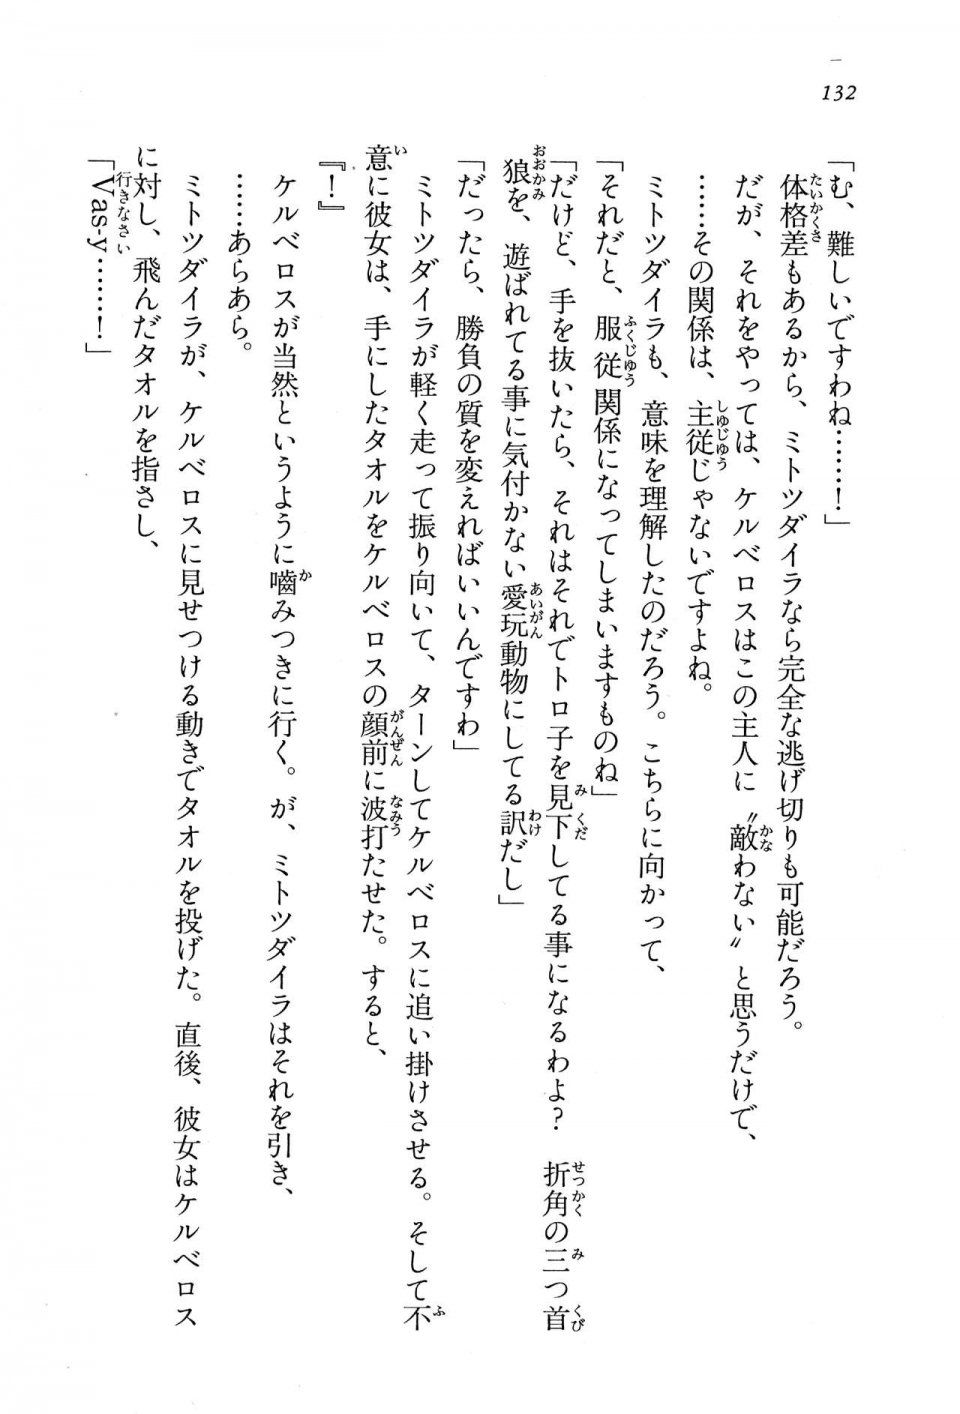 Kyoukai Senjou no Horizon BD Special Mininovel Vol 6(3B) - Photo #136